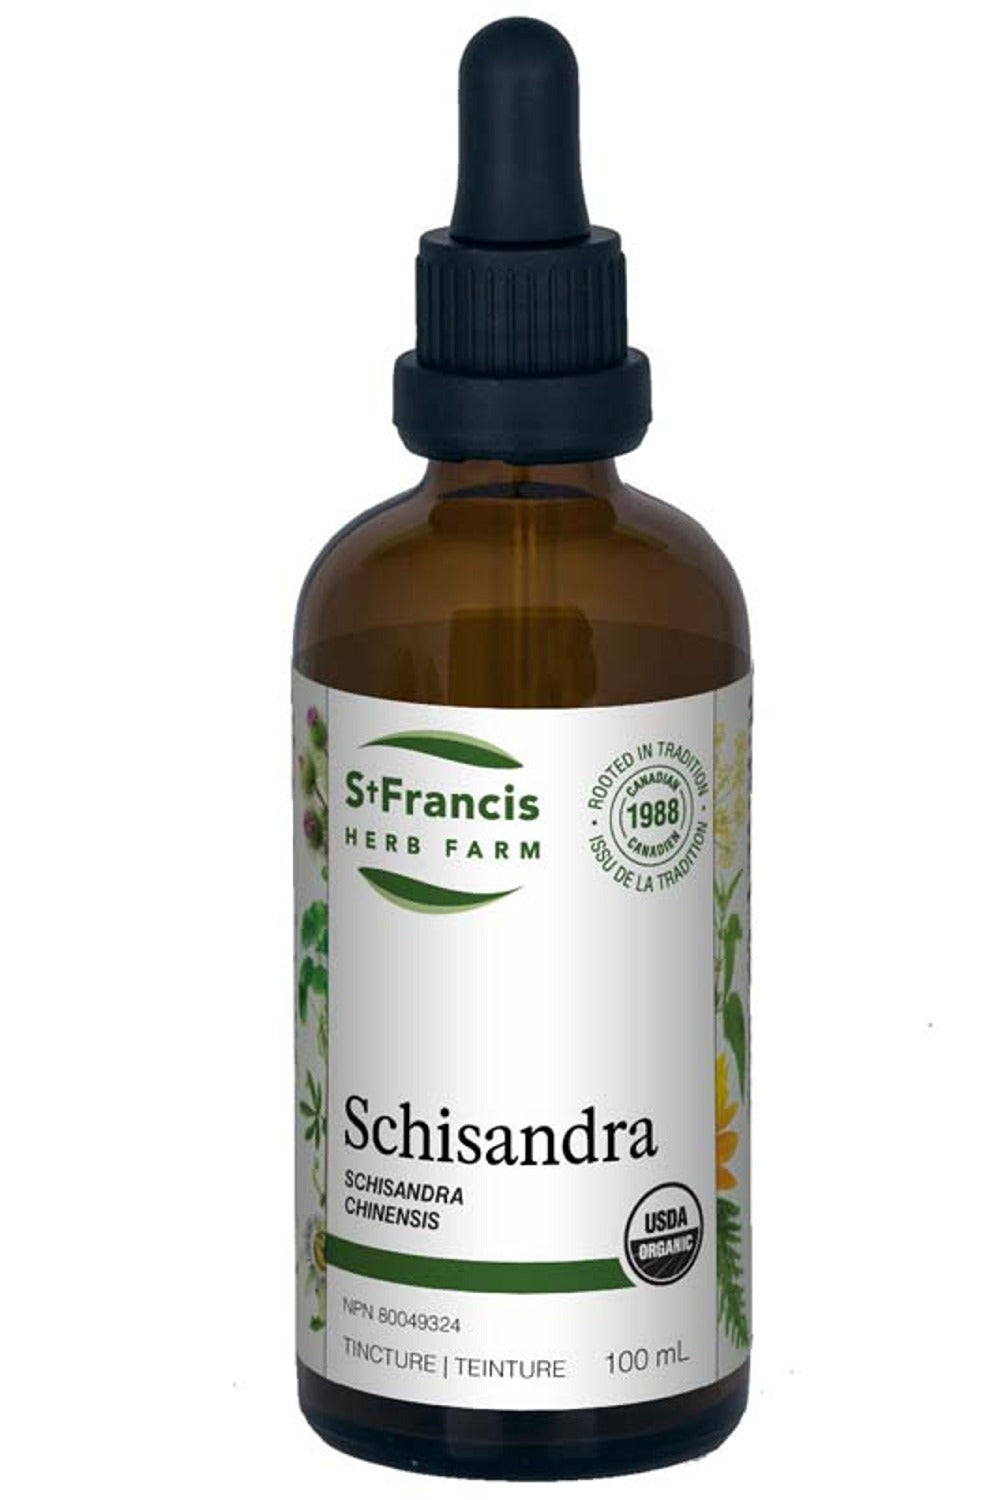 ST FRANCIS HERB FARM Schisandra (100 ml)